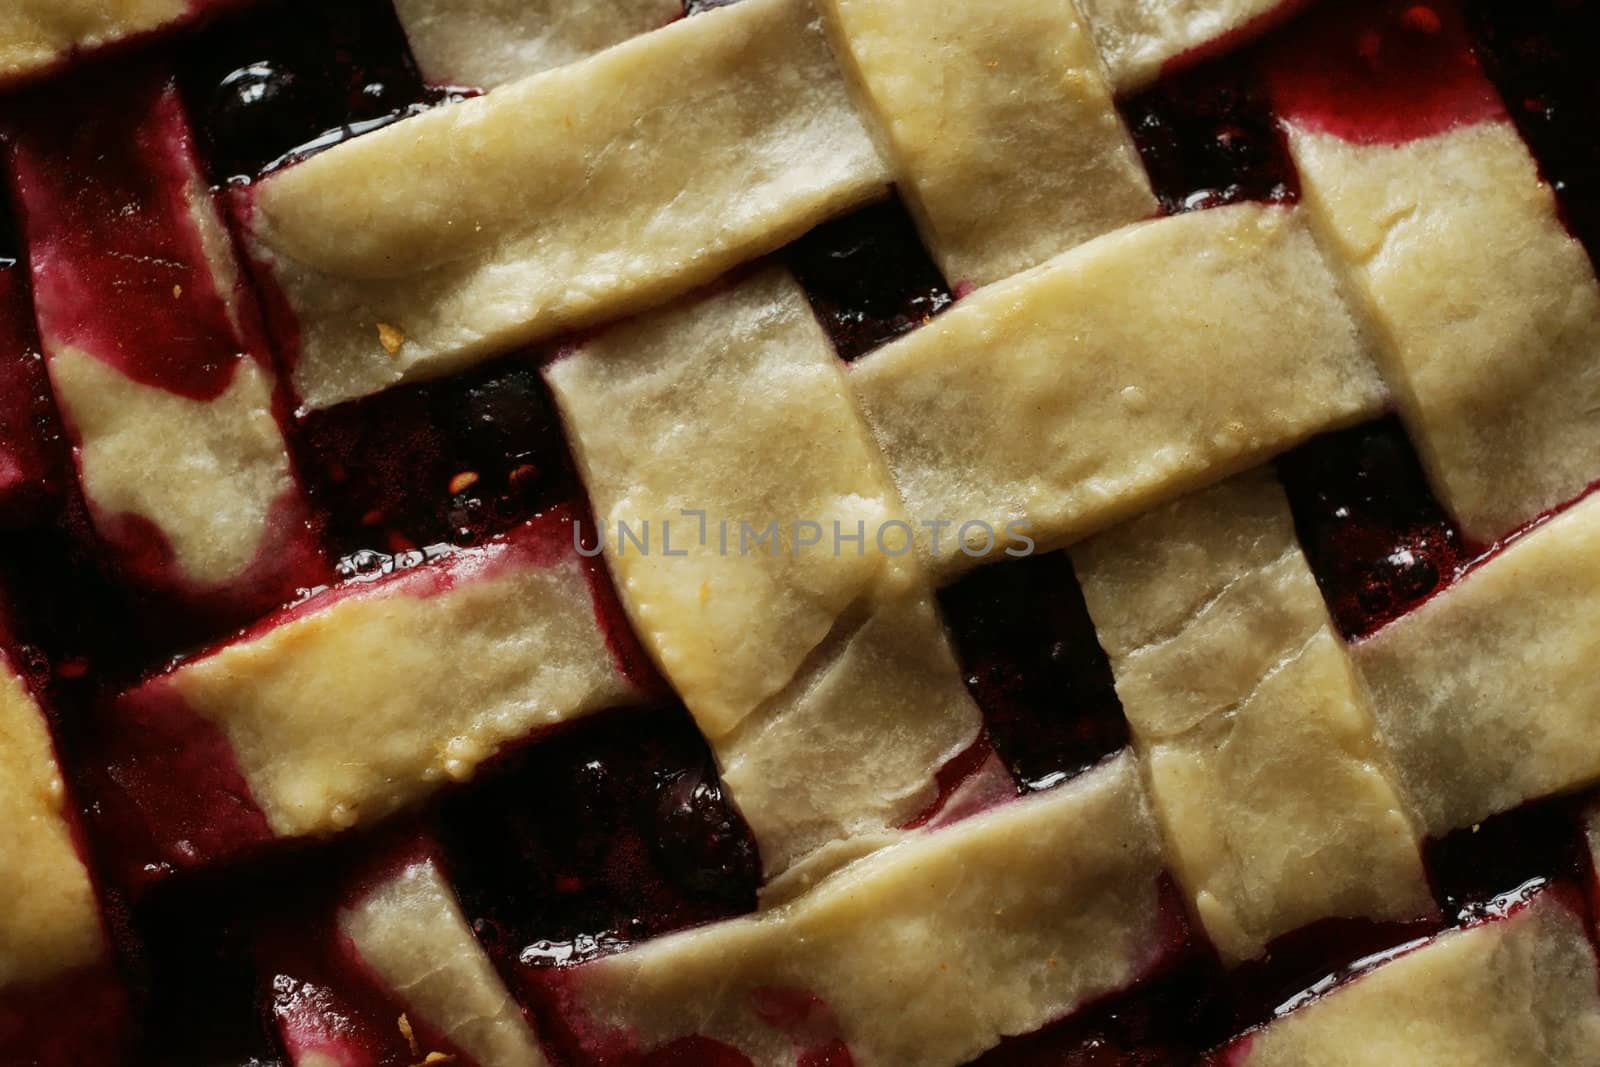 Berry pie background by mulden